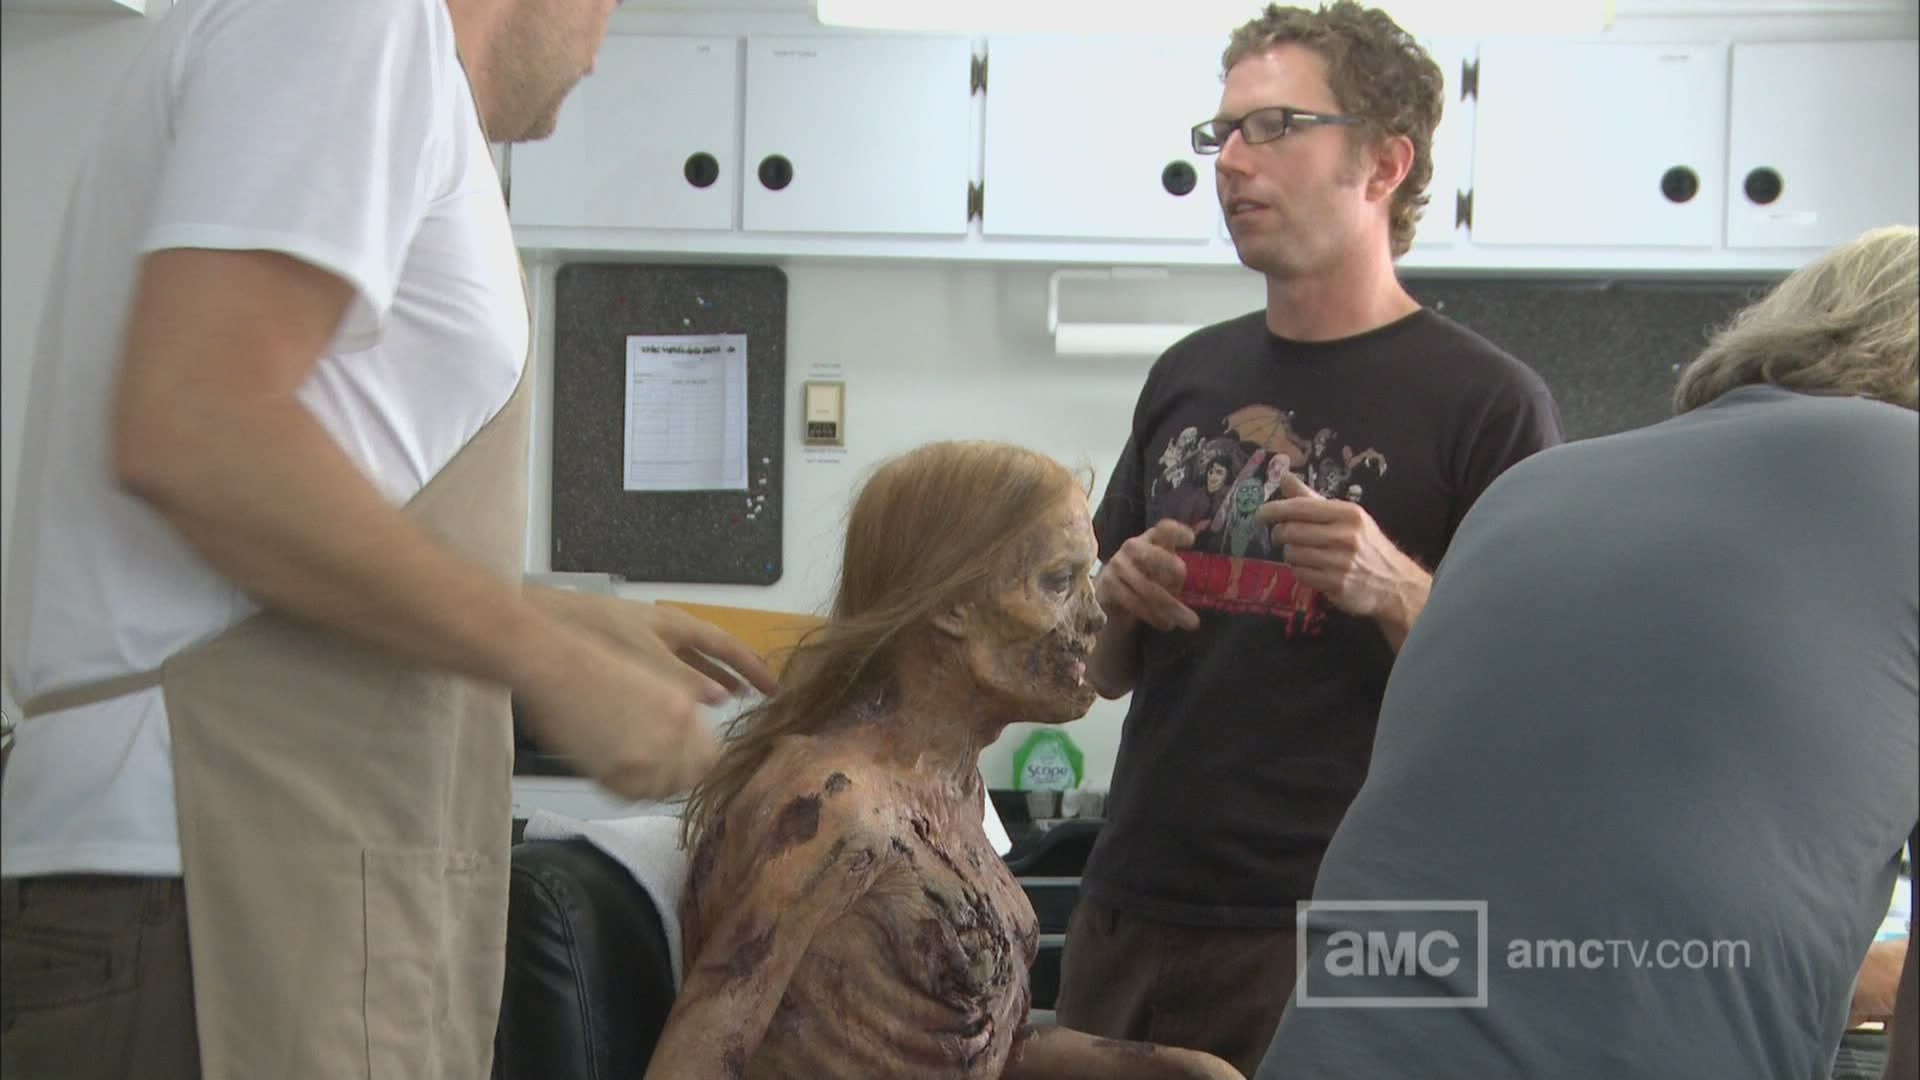 The Walking Dead - Behind The Scenes Part 2 1080i HDTV MPEG2 - RAS[(008811)11-56-54].JPG